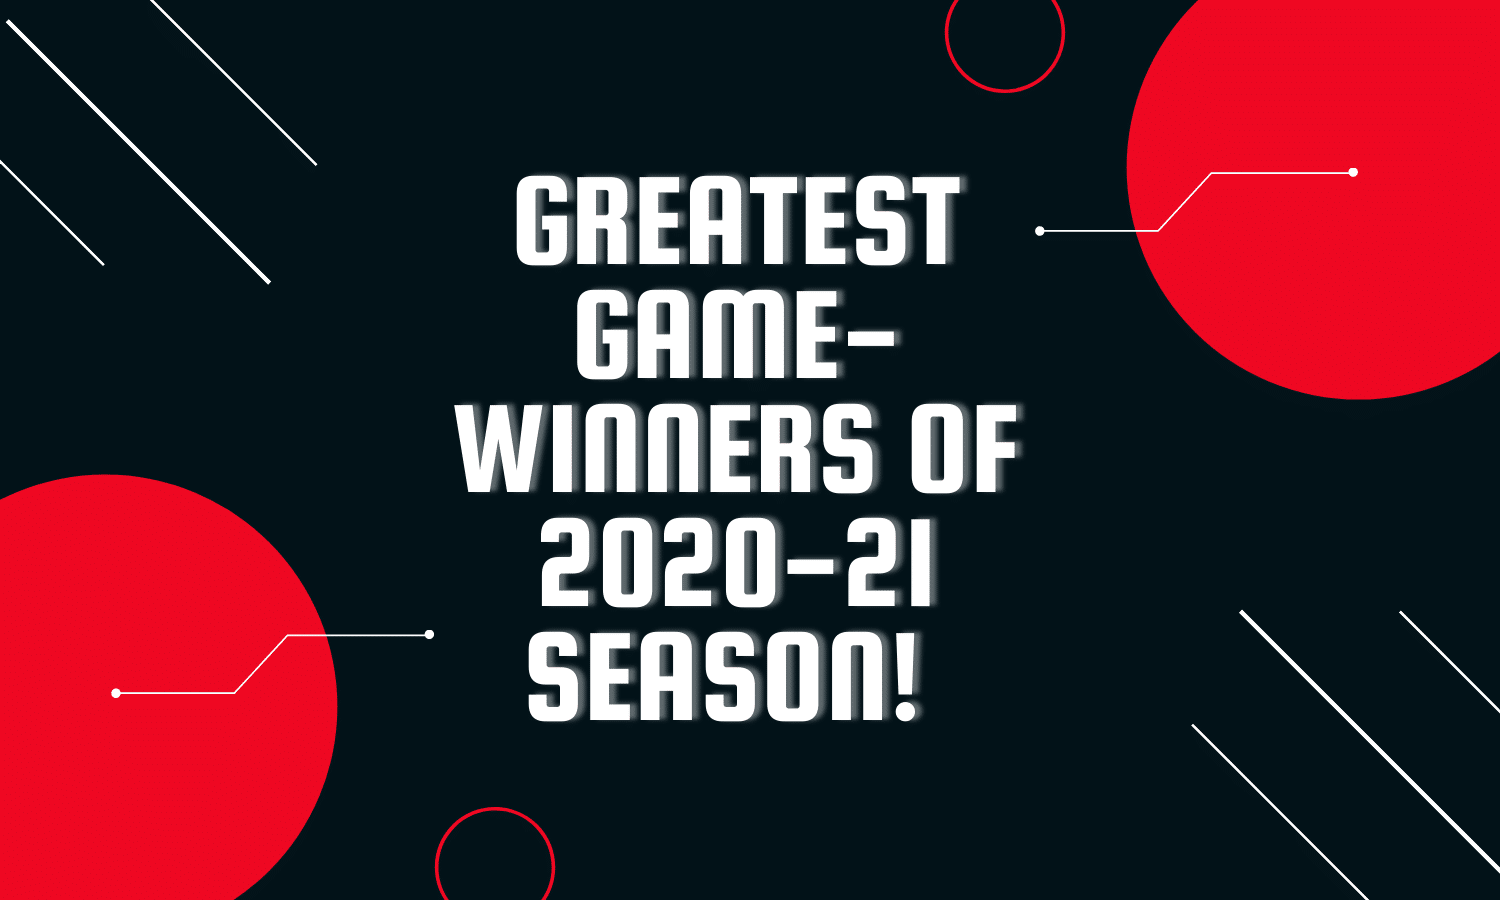 Best Game-Winner Of The 2020-21 Season!